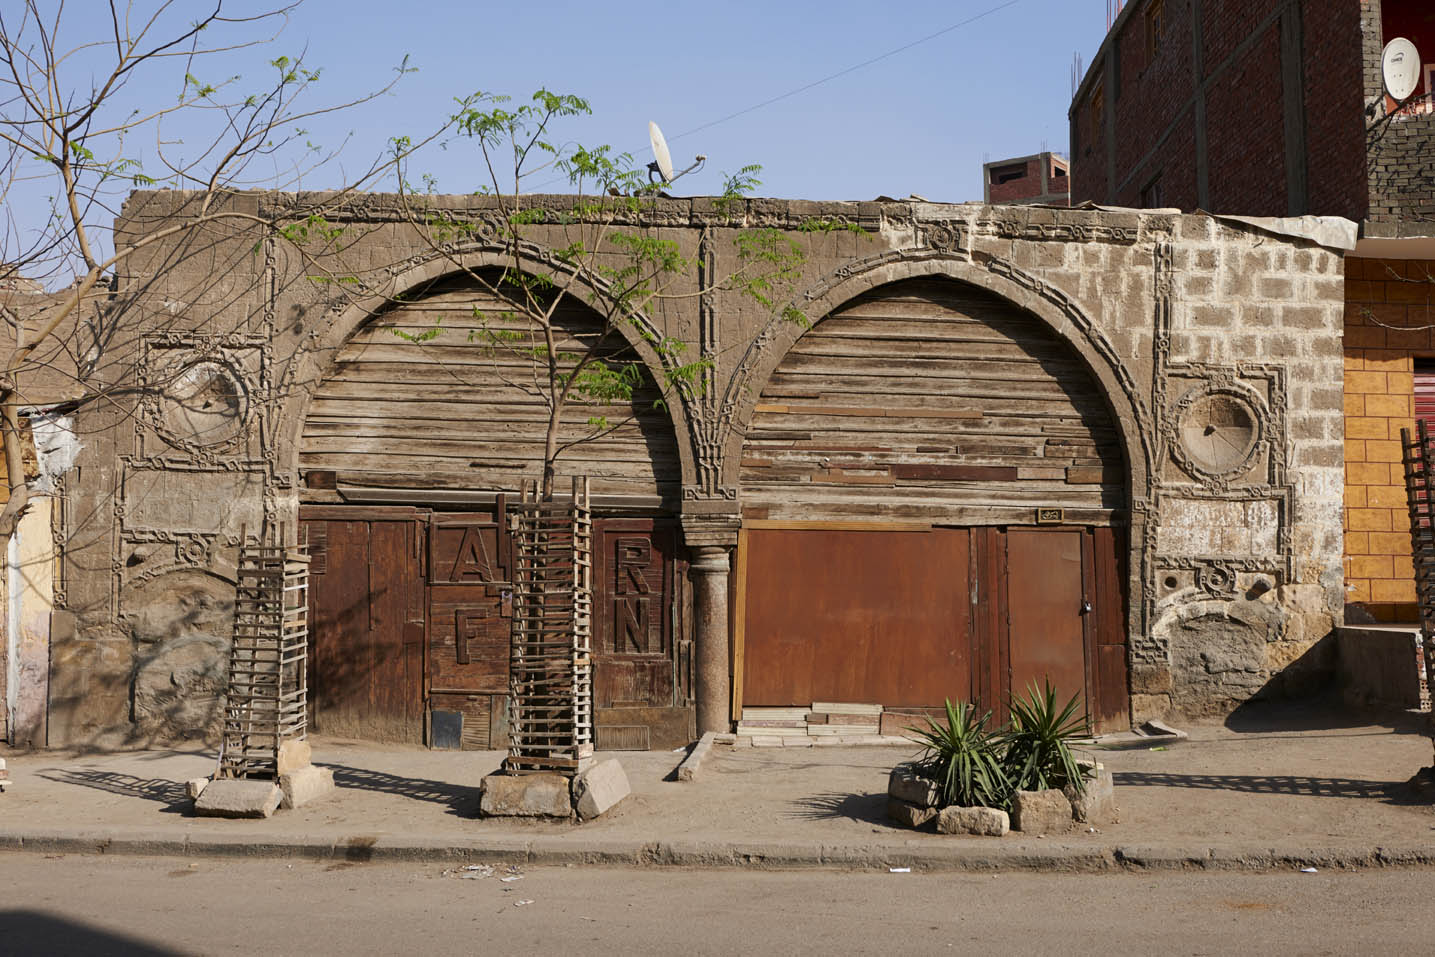 Hawd facade on Shari' Bab al-Wada, with closed-in arches